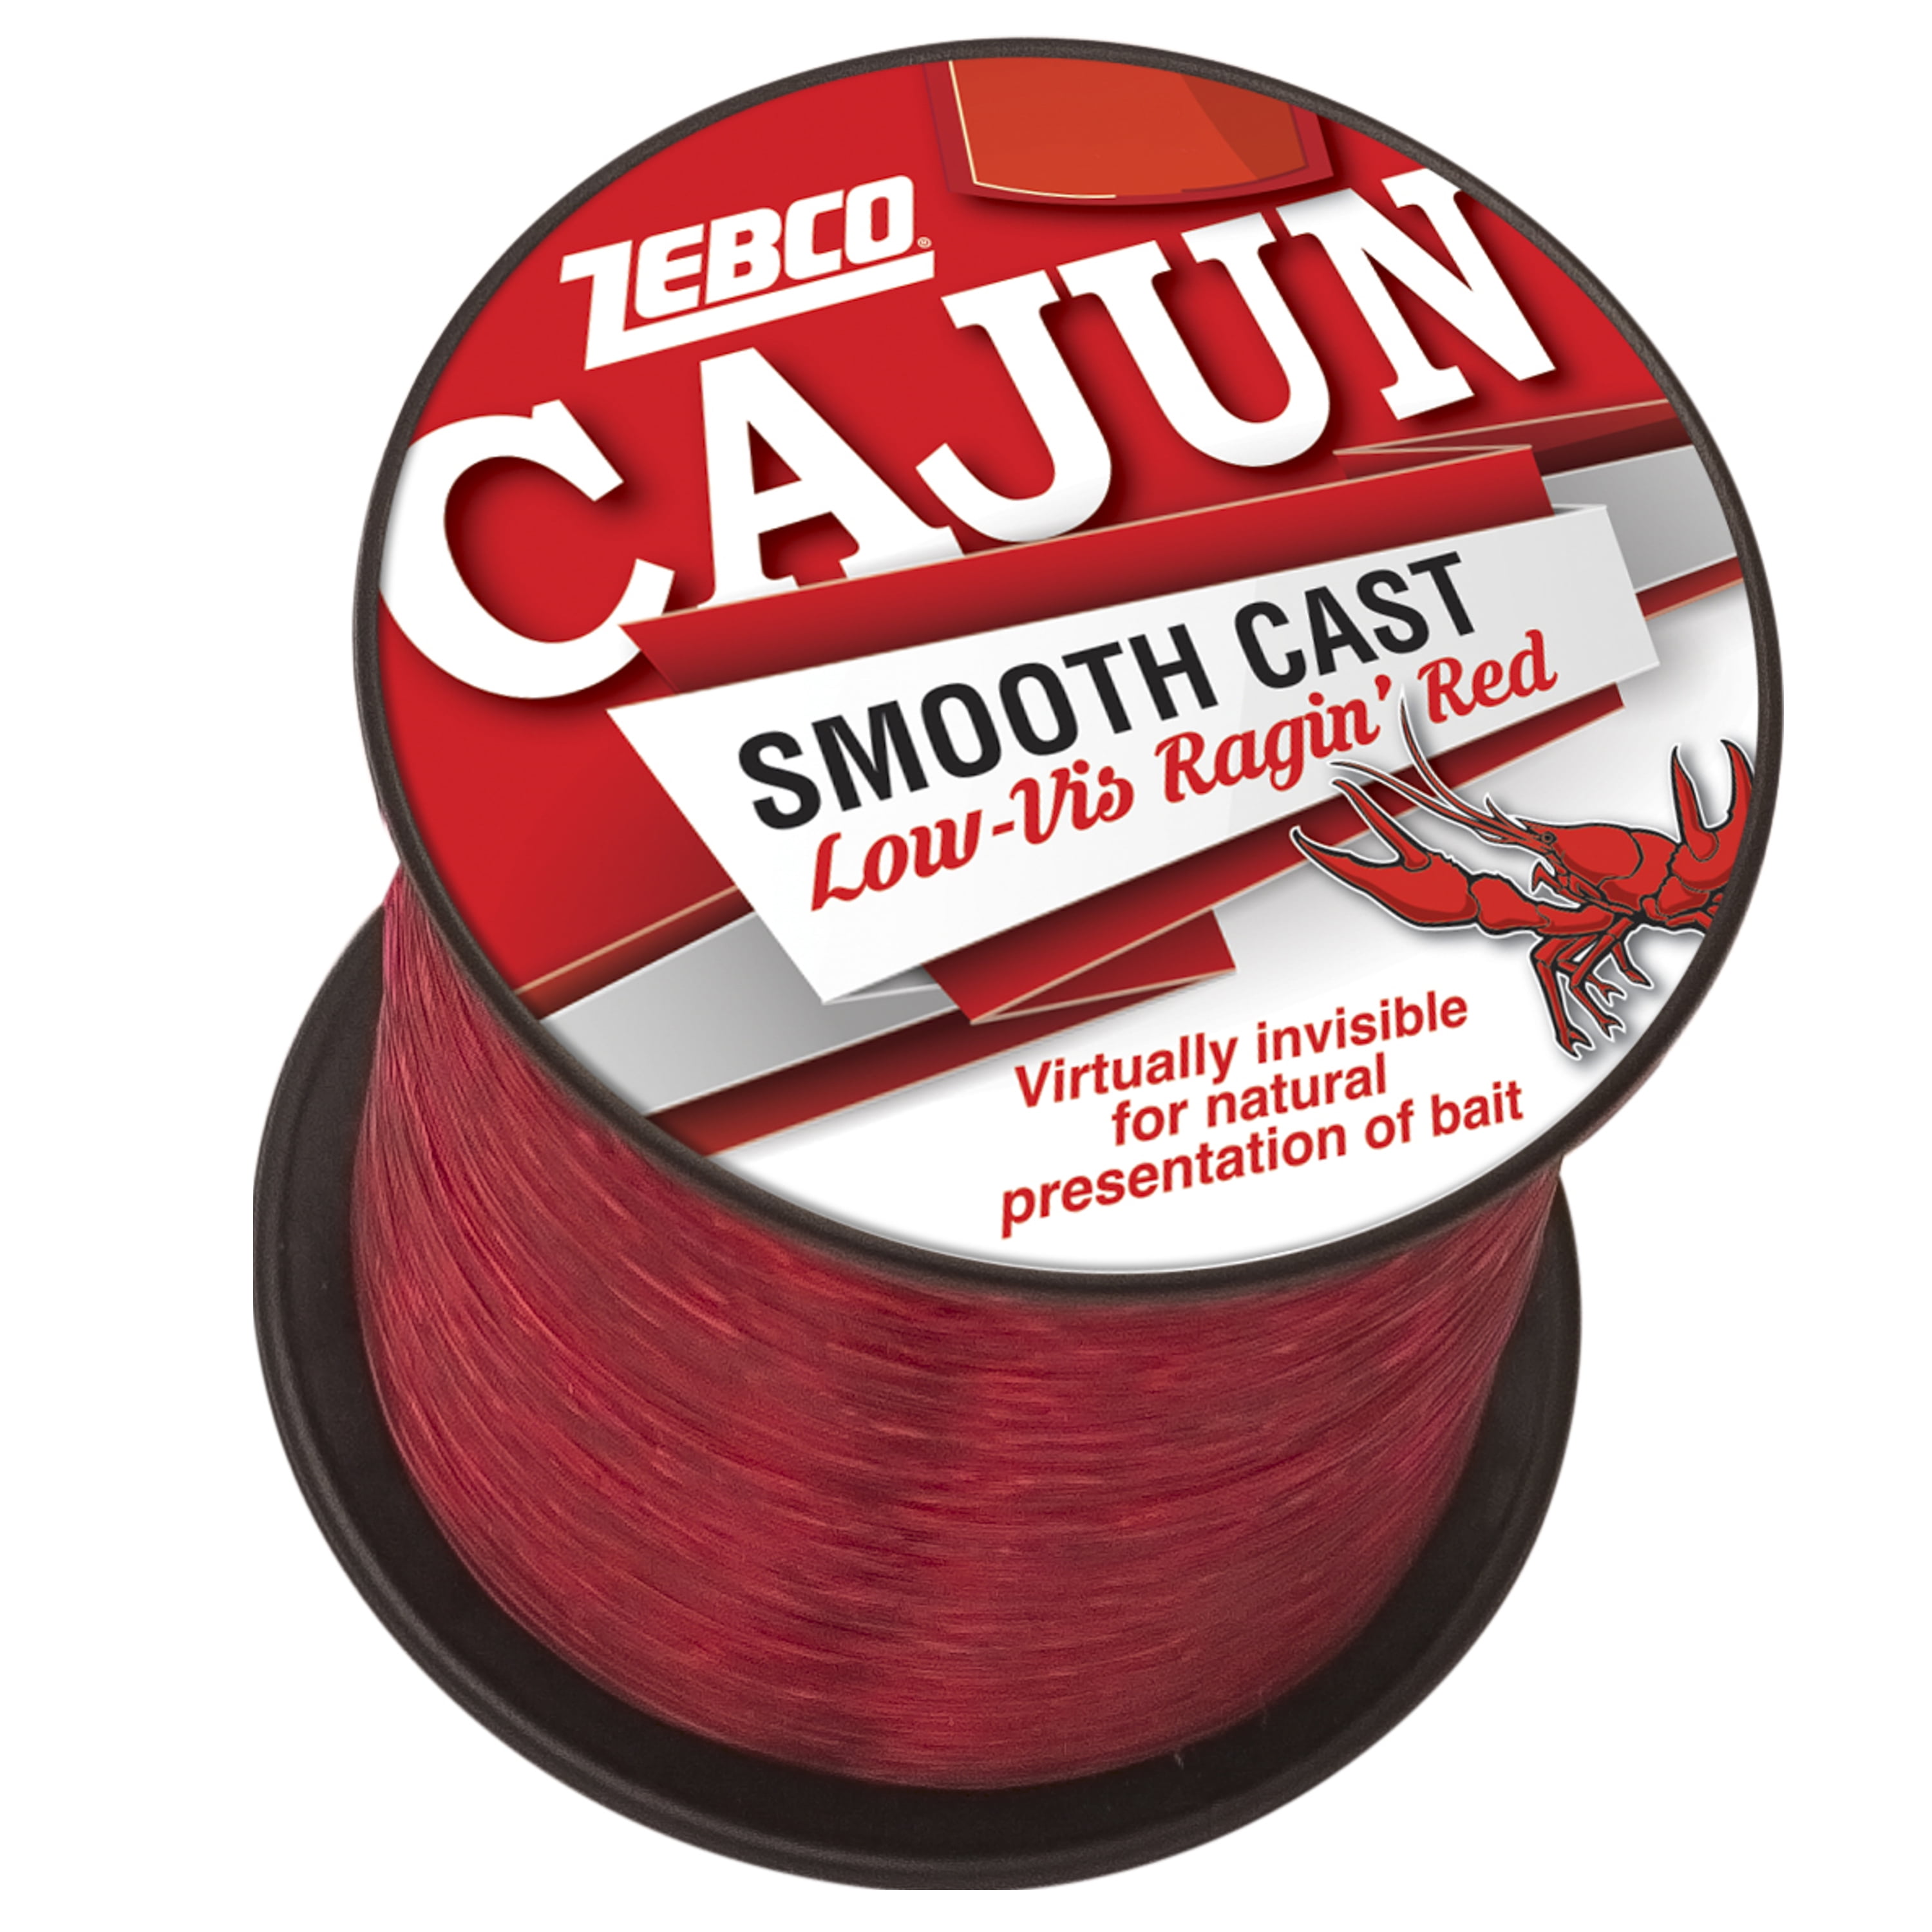 14 lb Multi Cajun Line Zebco Cajun Low-Vis Fishing Line Pony 14 Lb/Test Low-Viz Ragin Red